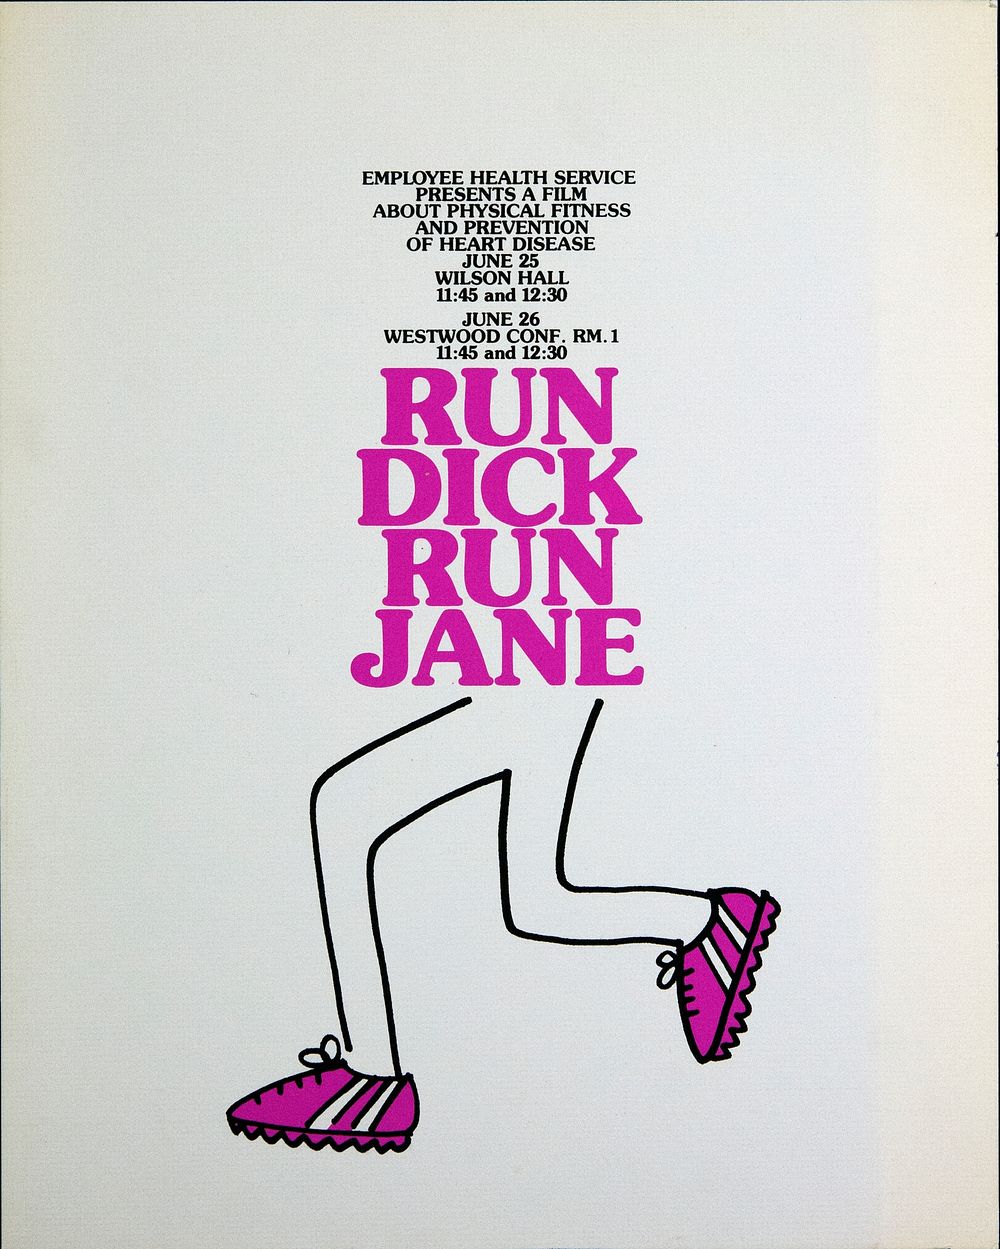 Run Dick, Run Jane. Original public domain image from Flickr